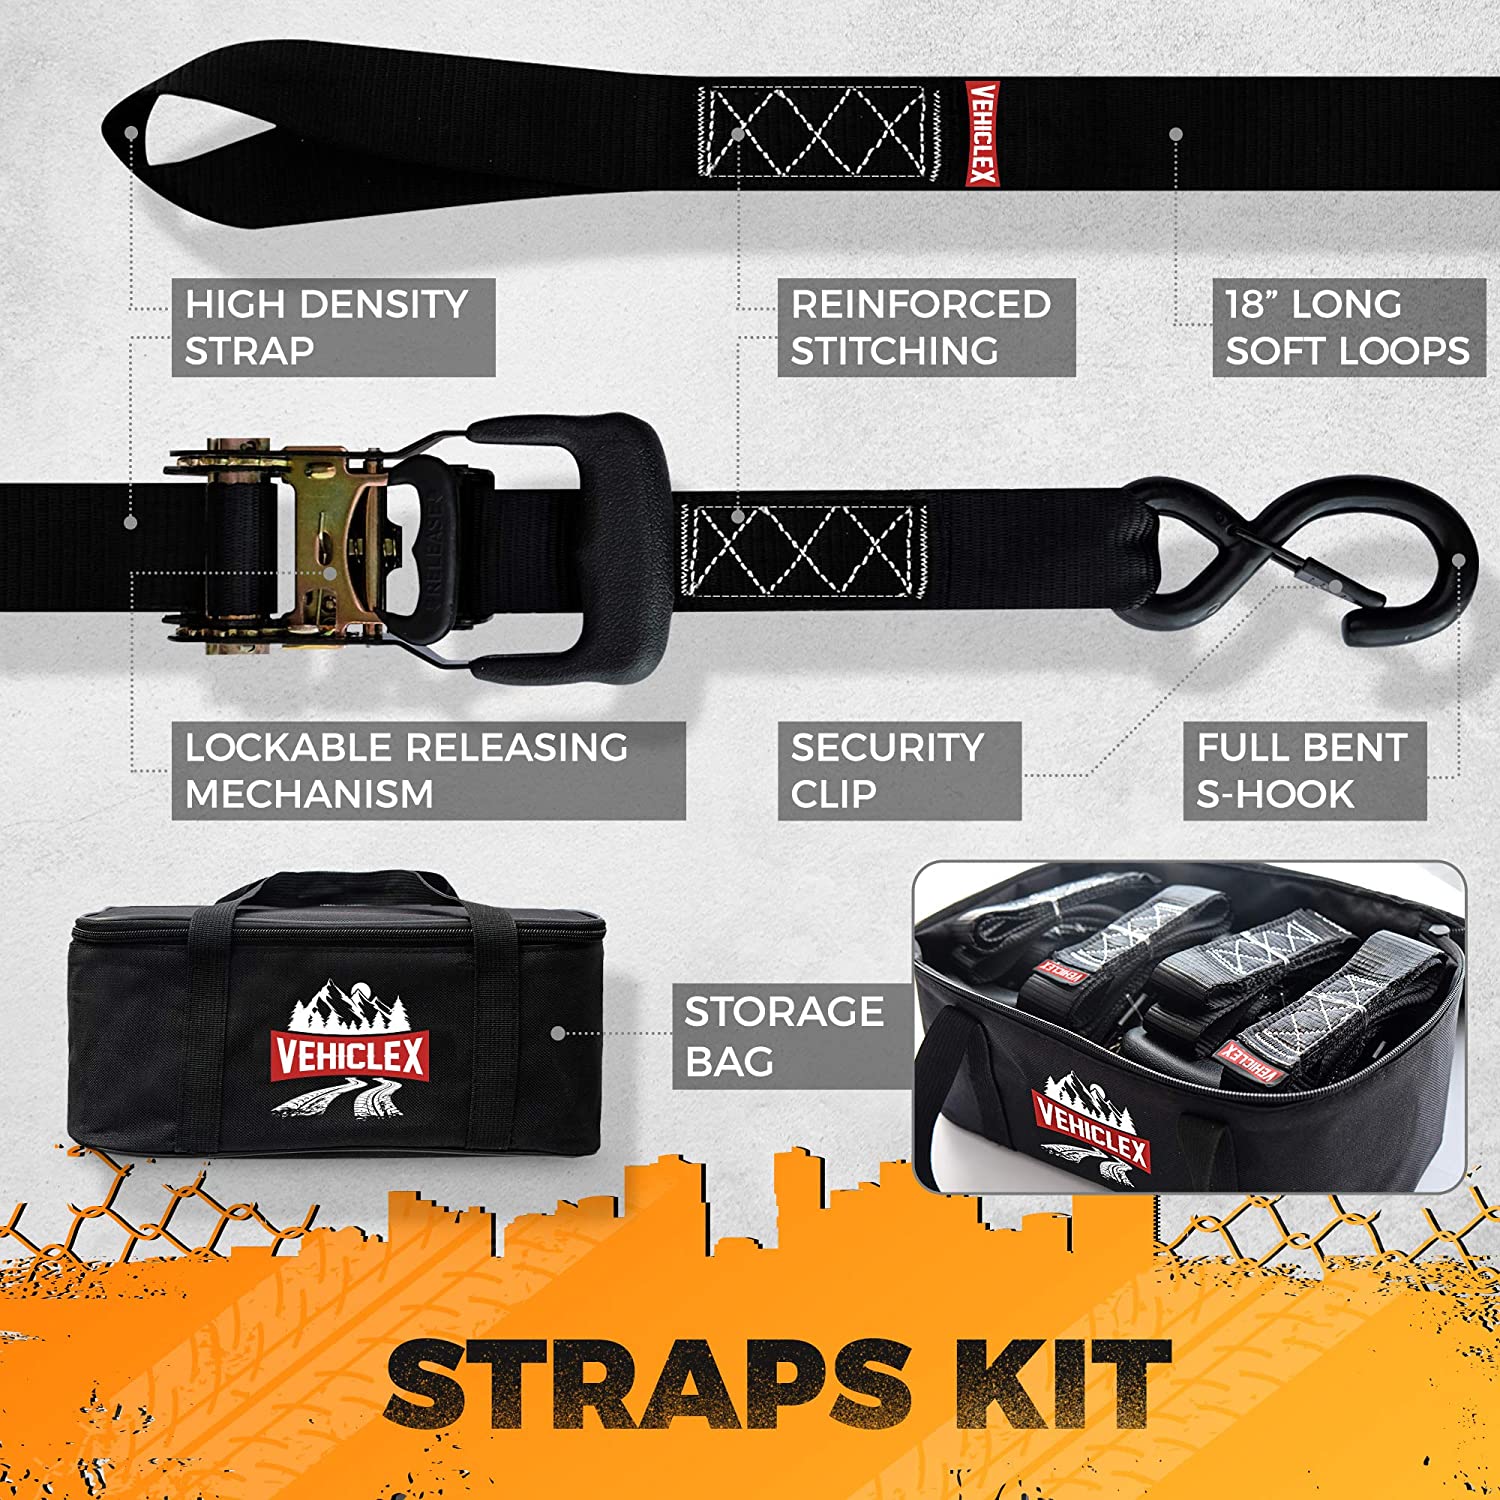 Straps set of ratchet strap tie downs by VehicleX